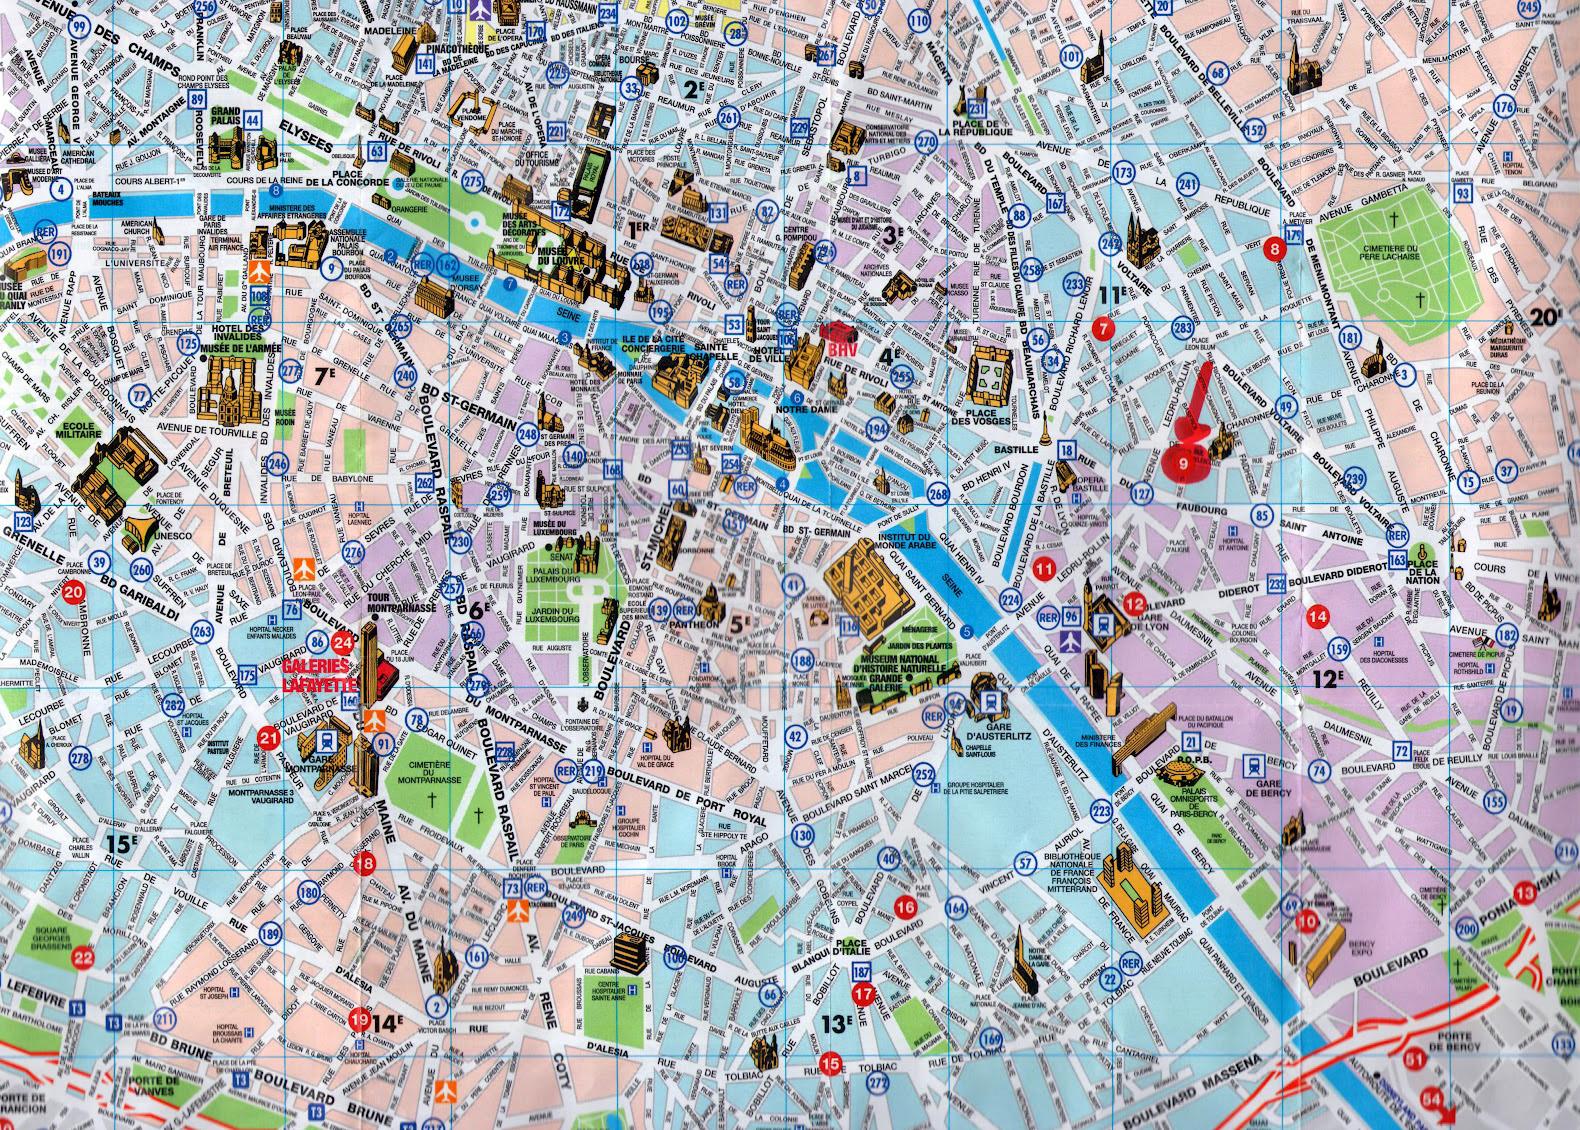 paris tourist attractions on map